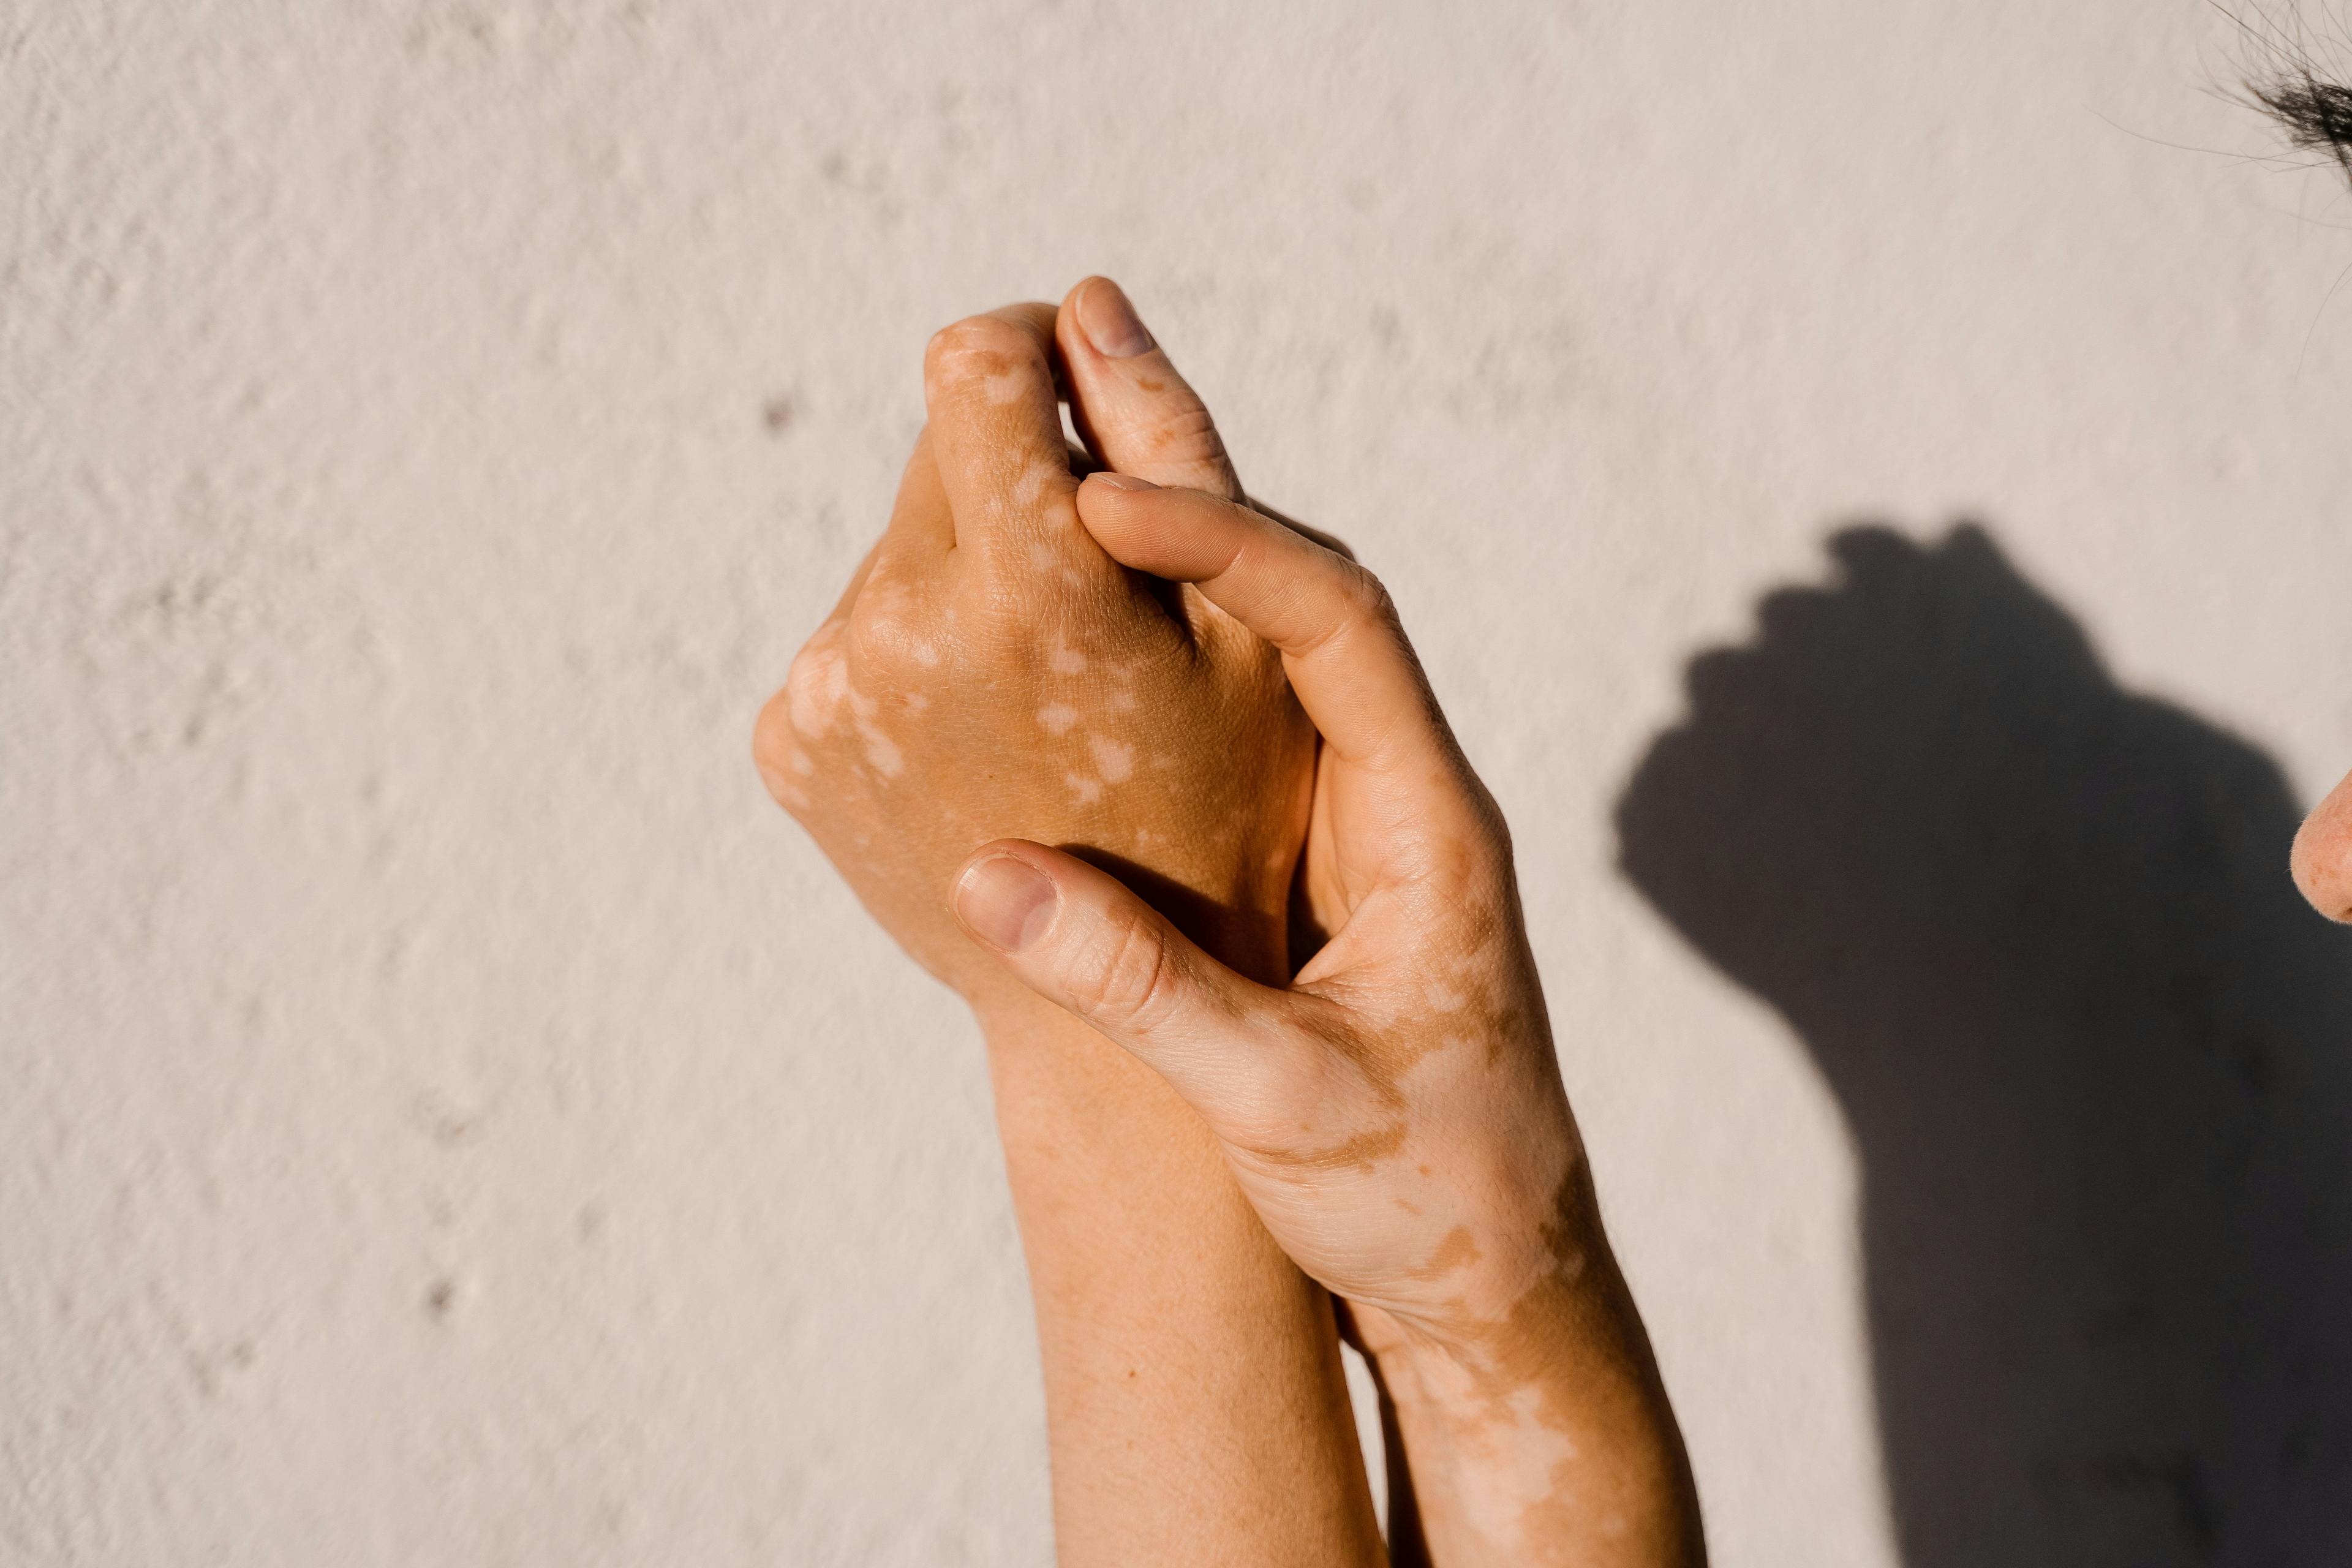 Vitiligo skin pigmentation on the hands of woman - Skin seasonal diseases | Image Credit: Rabizo Anatolii - stock.adobe.com